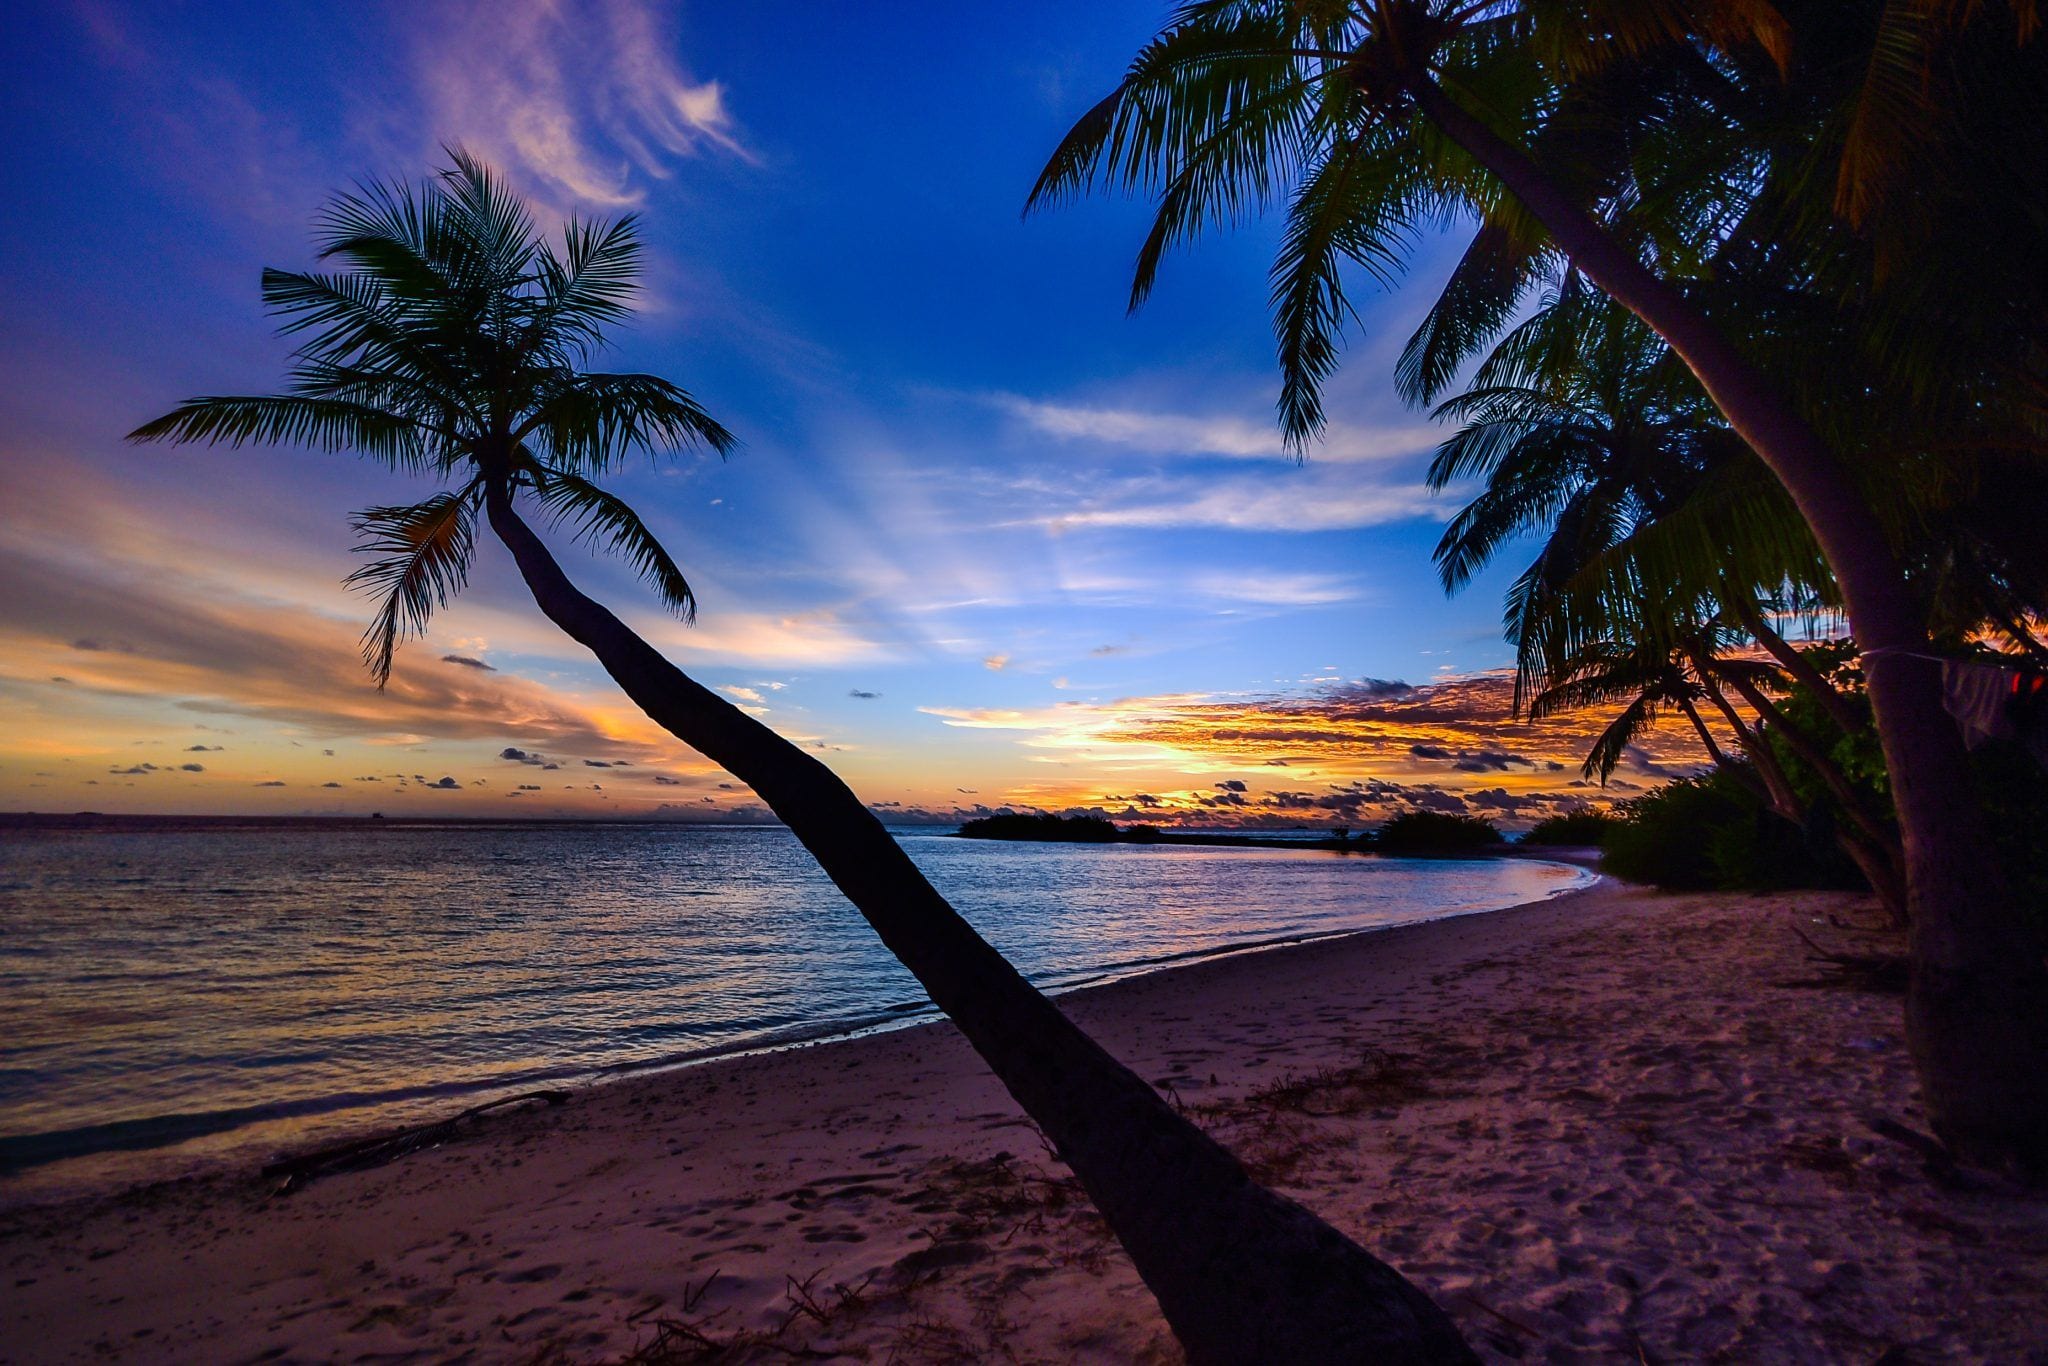 Beach Sunset With Palm Trees | CASA DE LAS PALMAS